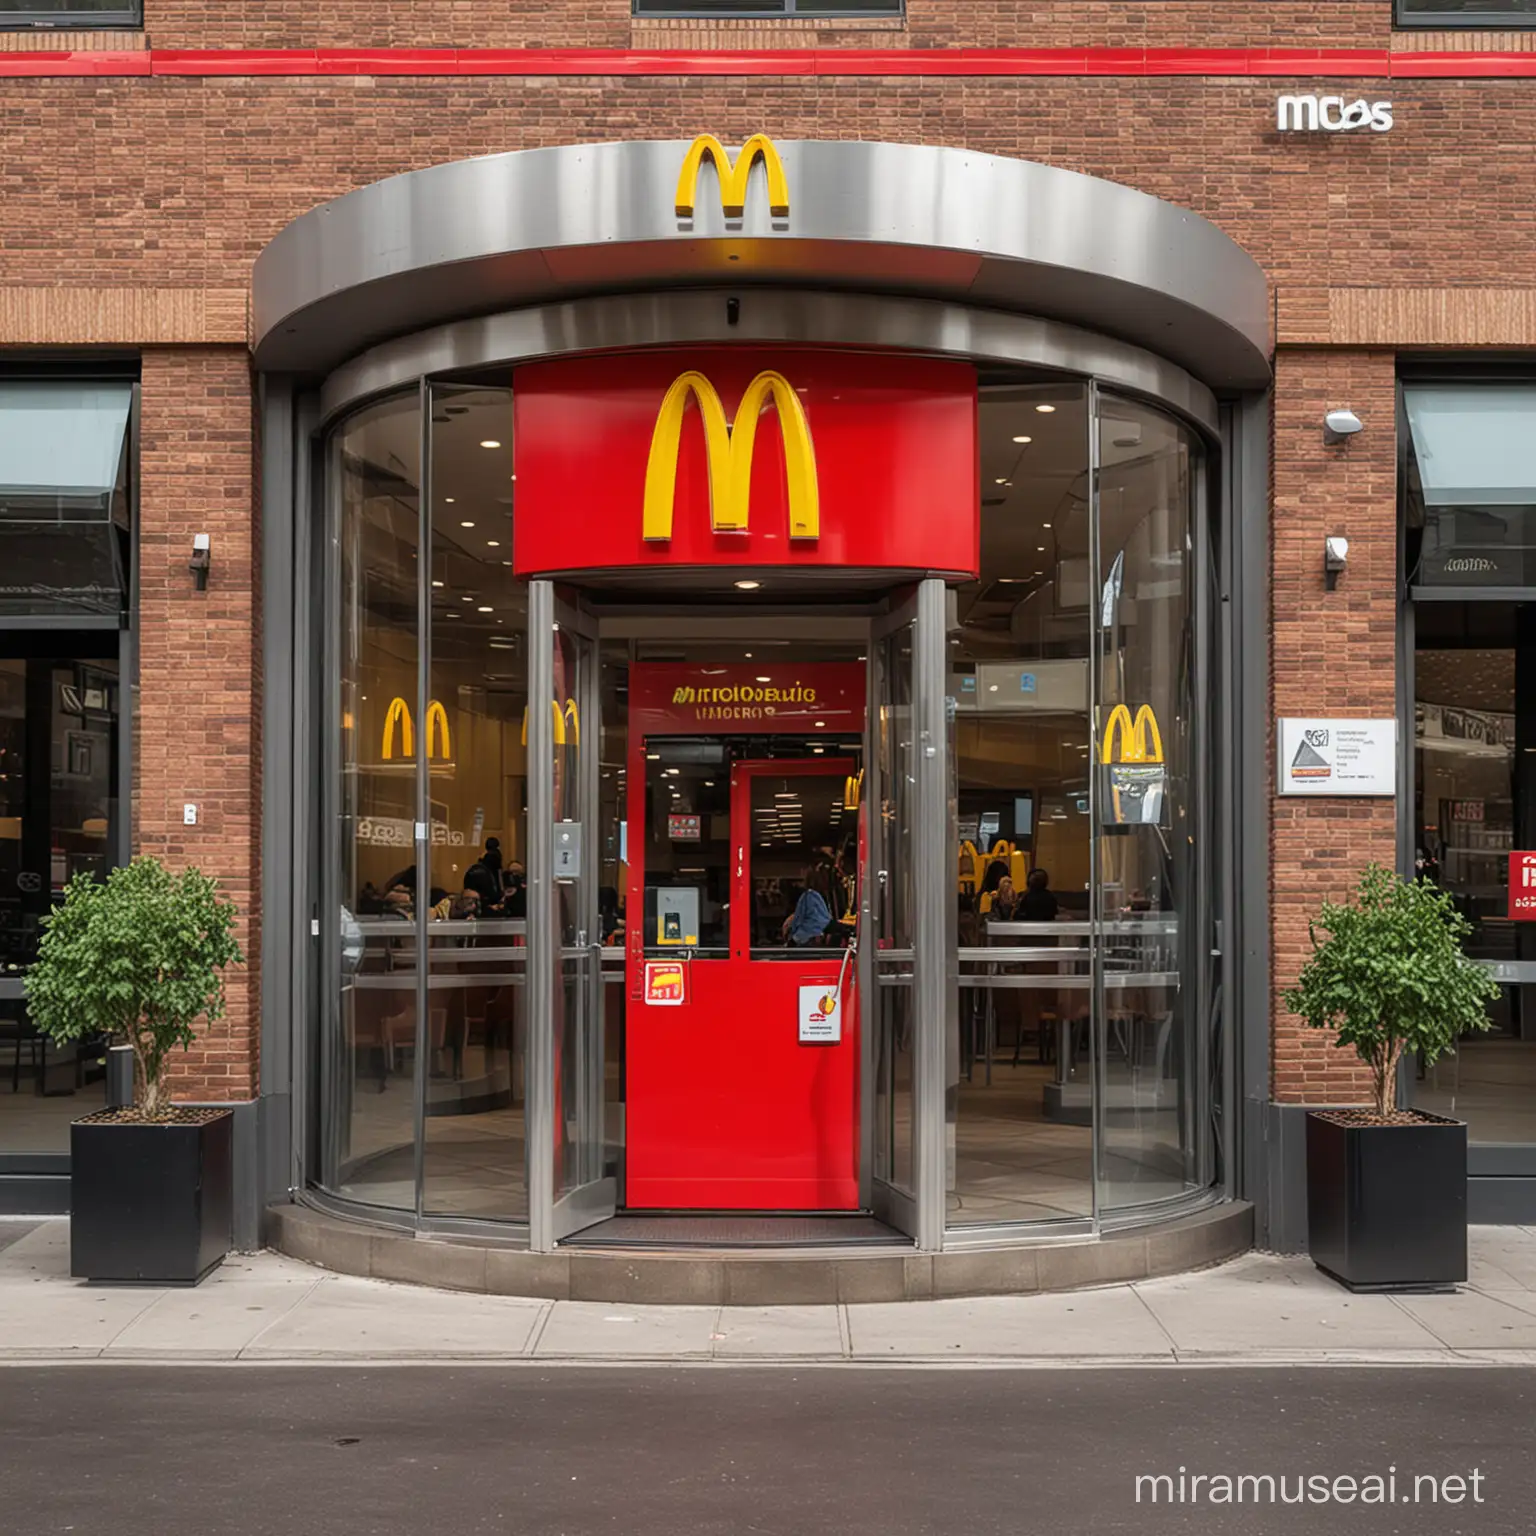 a circular revolving door entrance to mcdonalds restaurant, mcdonalds visual identity